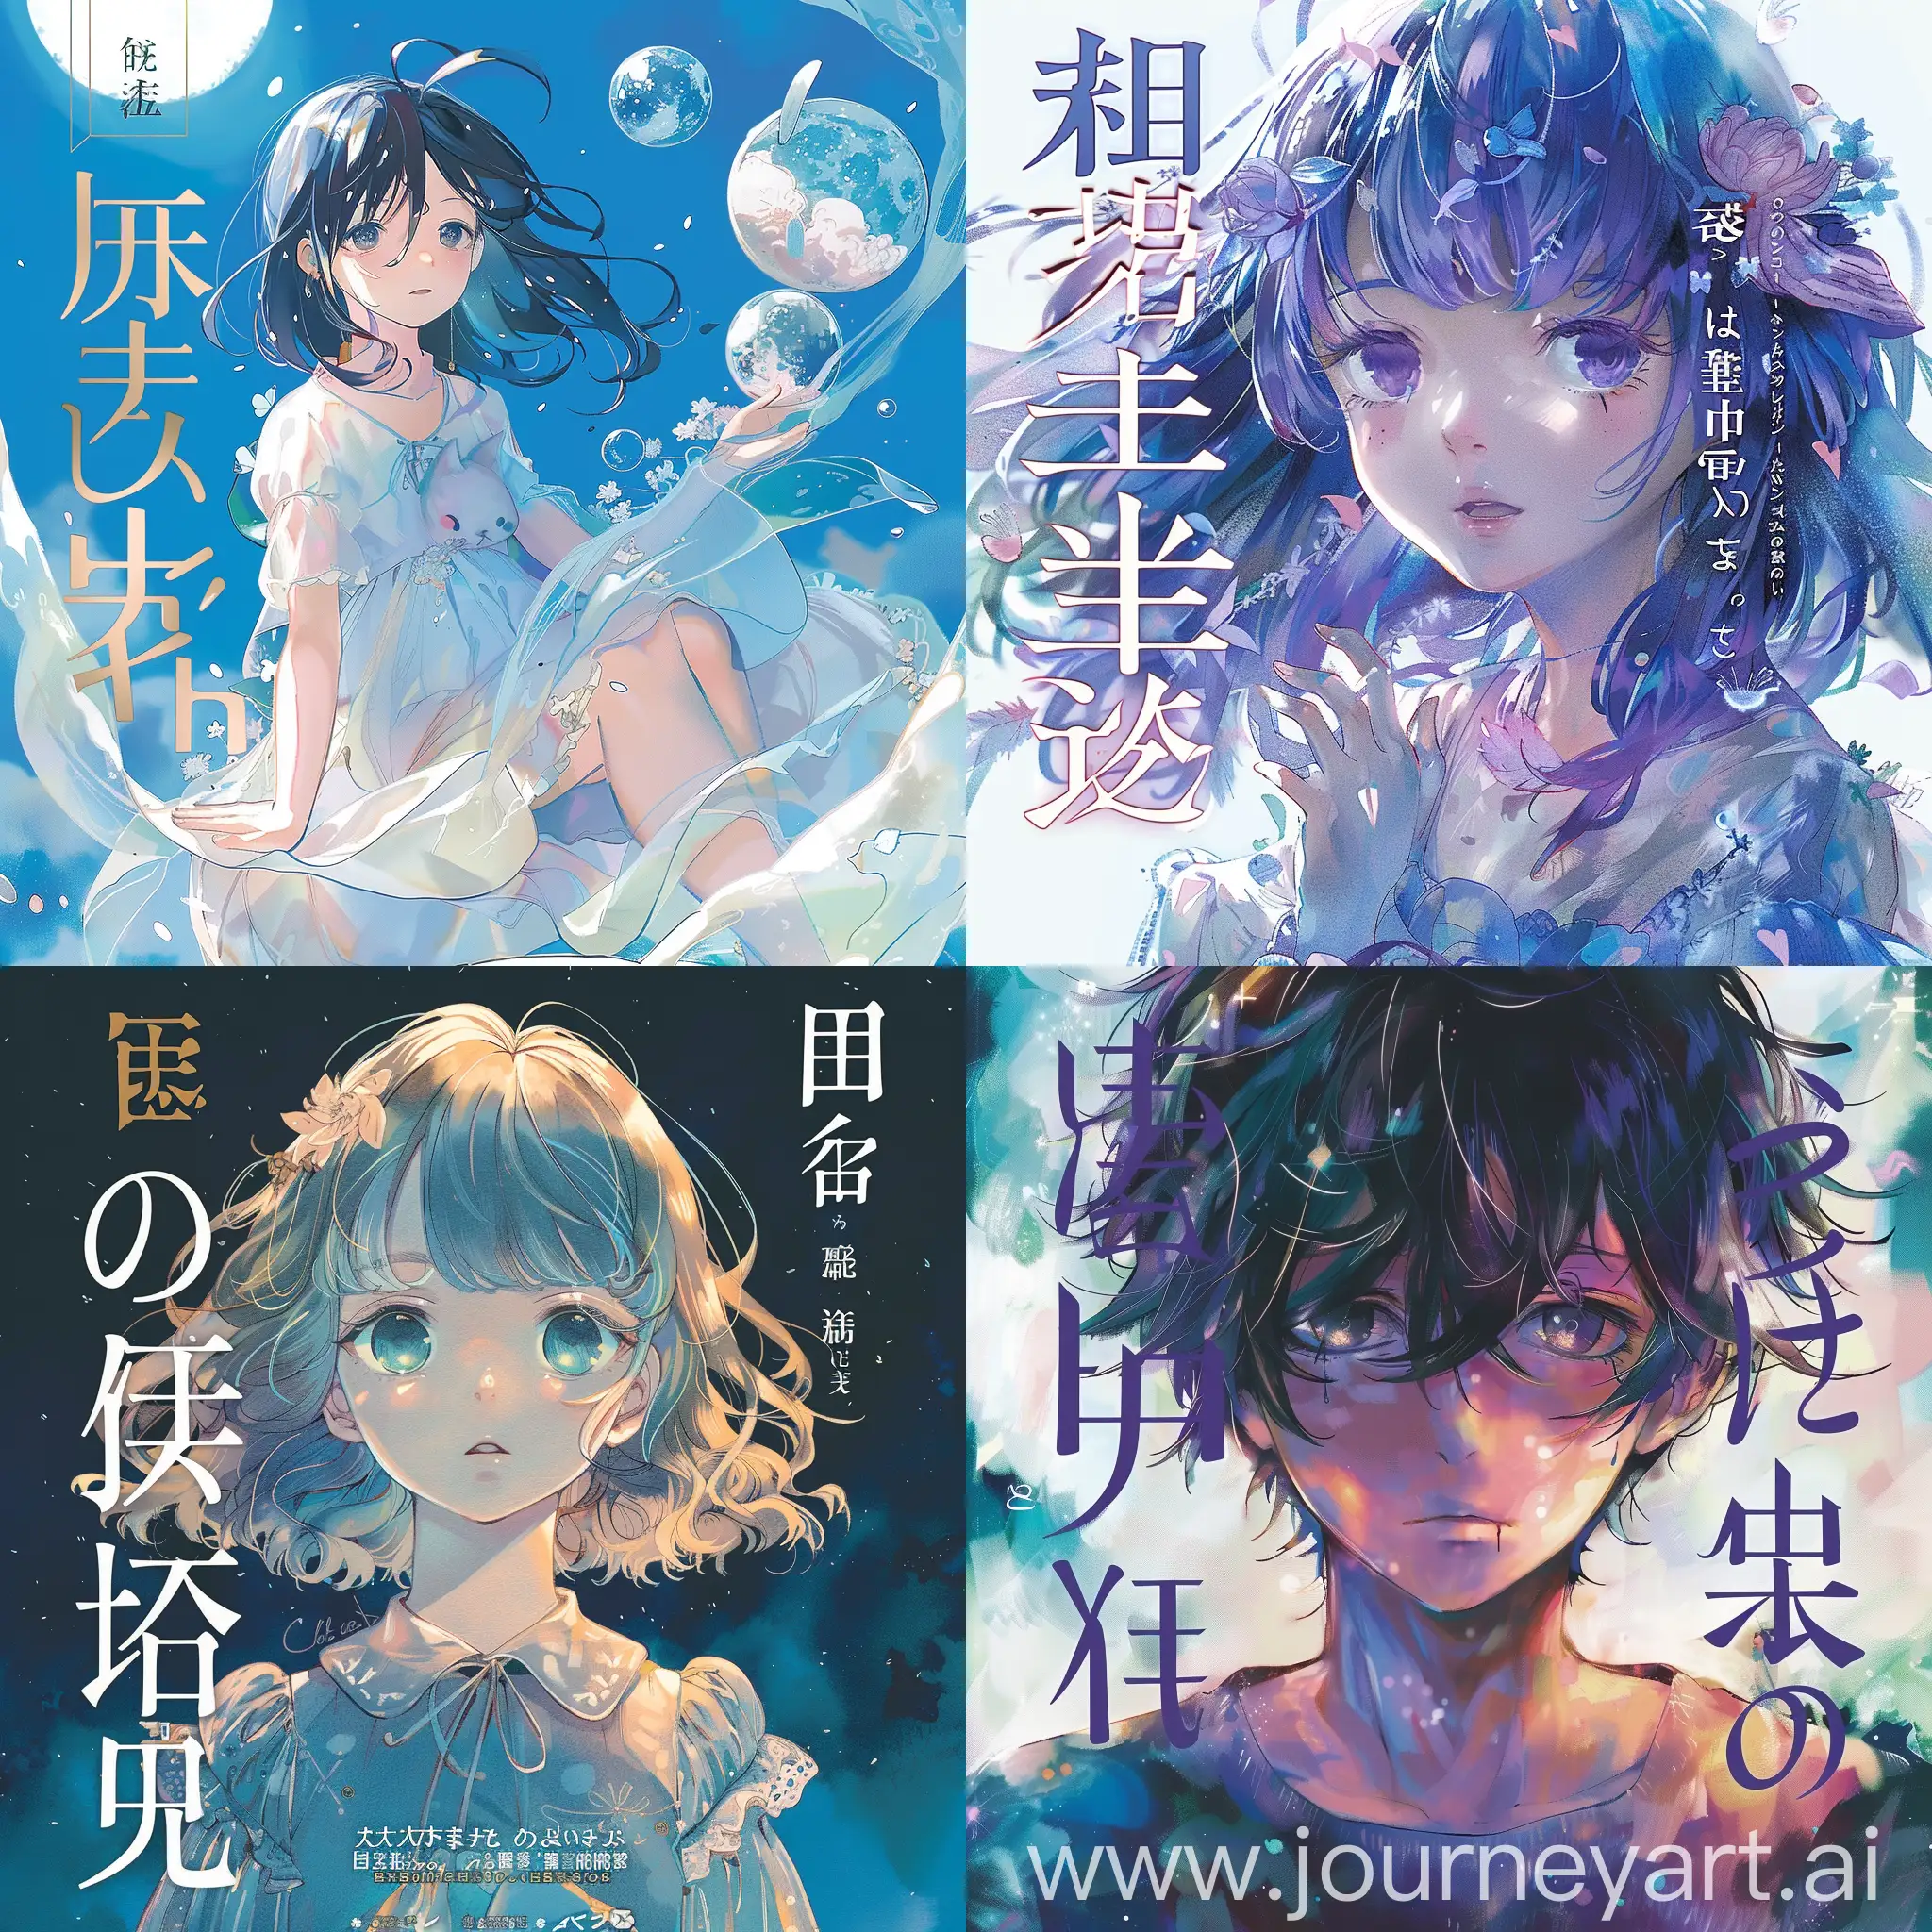 Anime-Character-in-Dream-World-Illustration